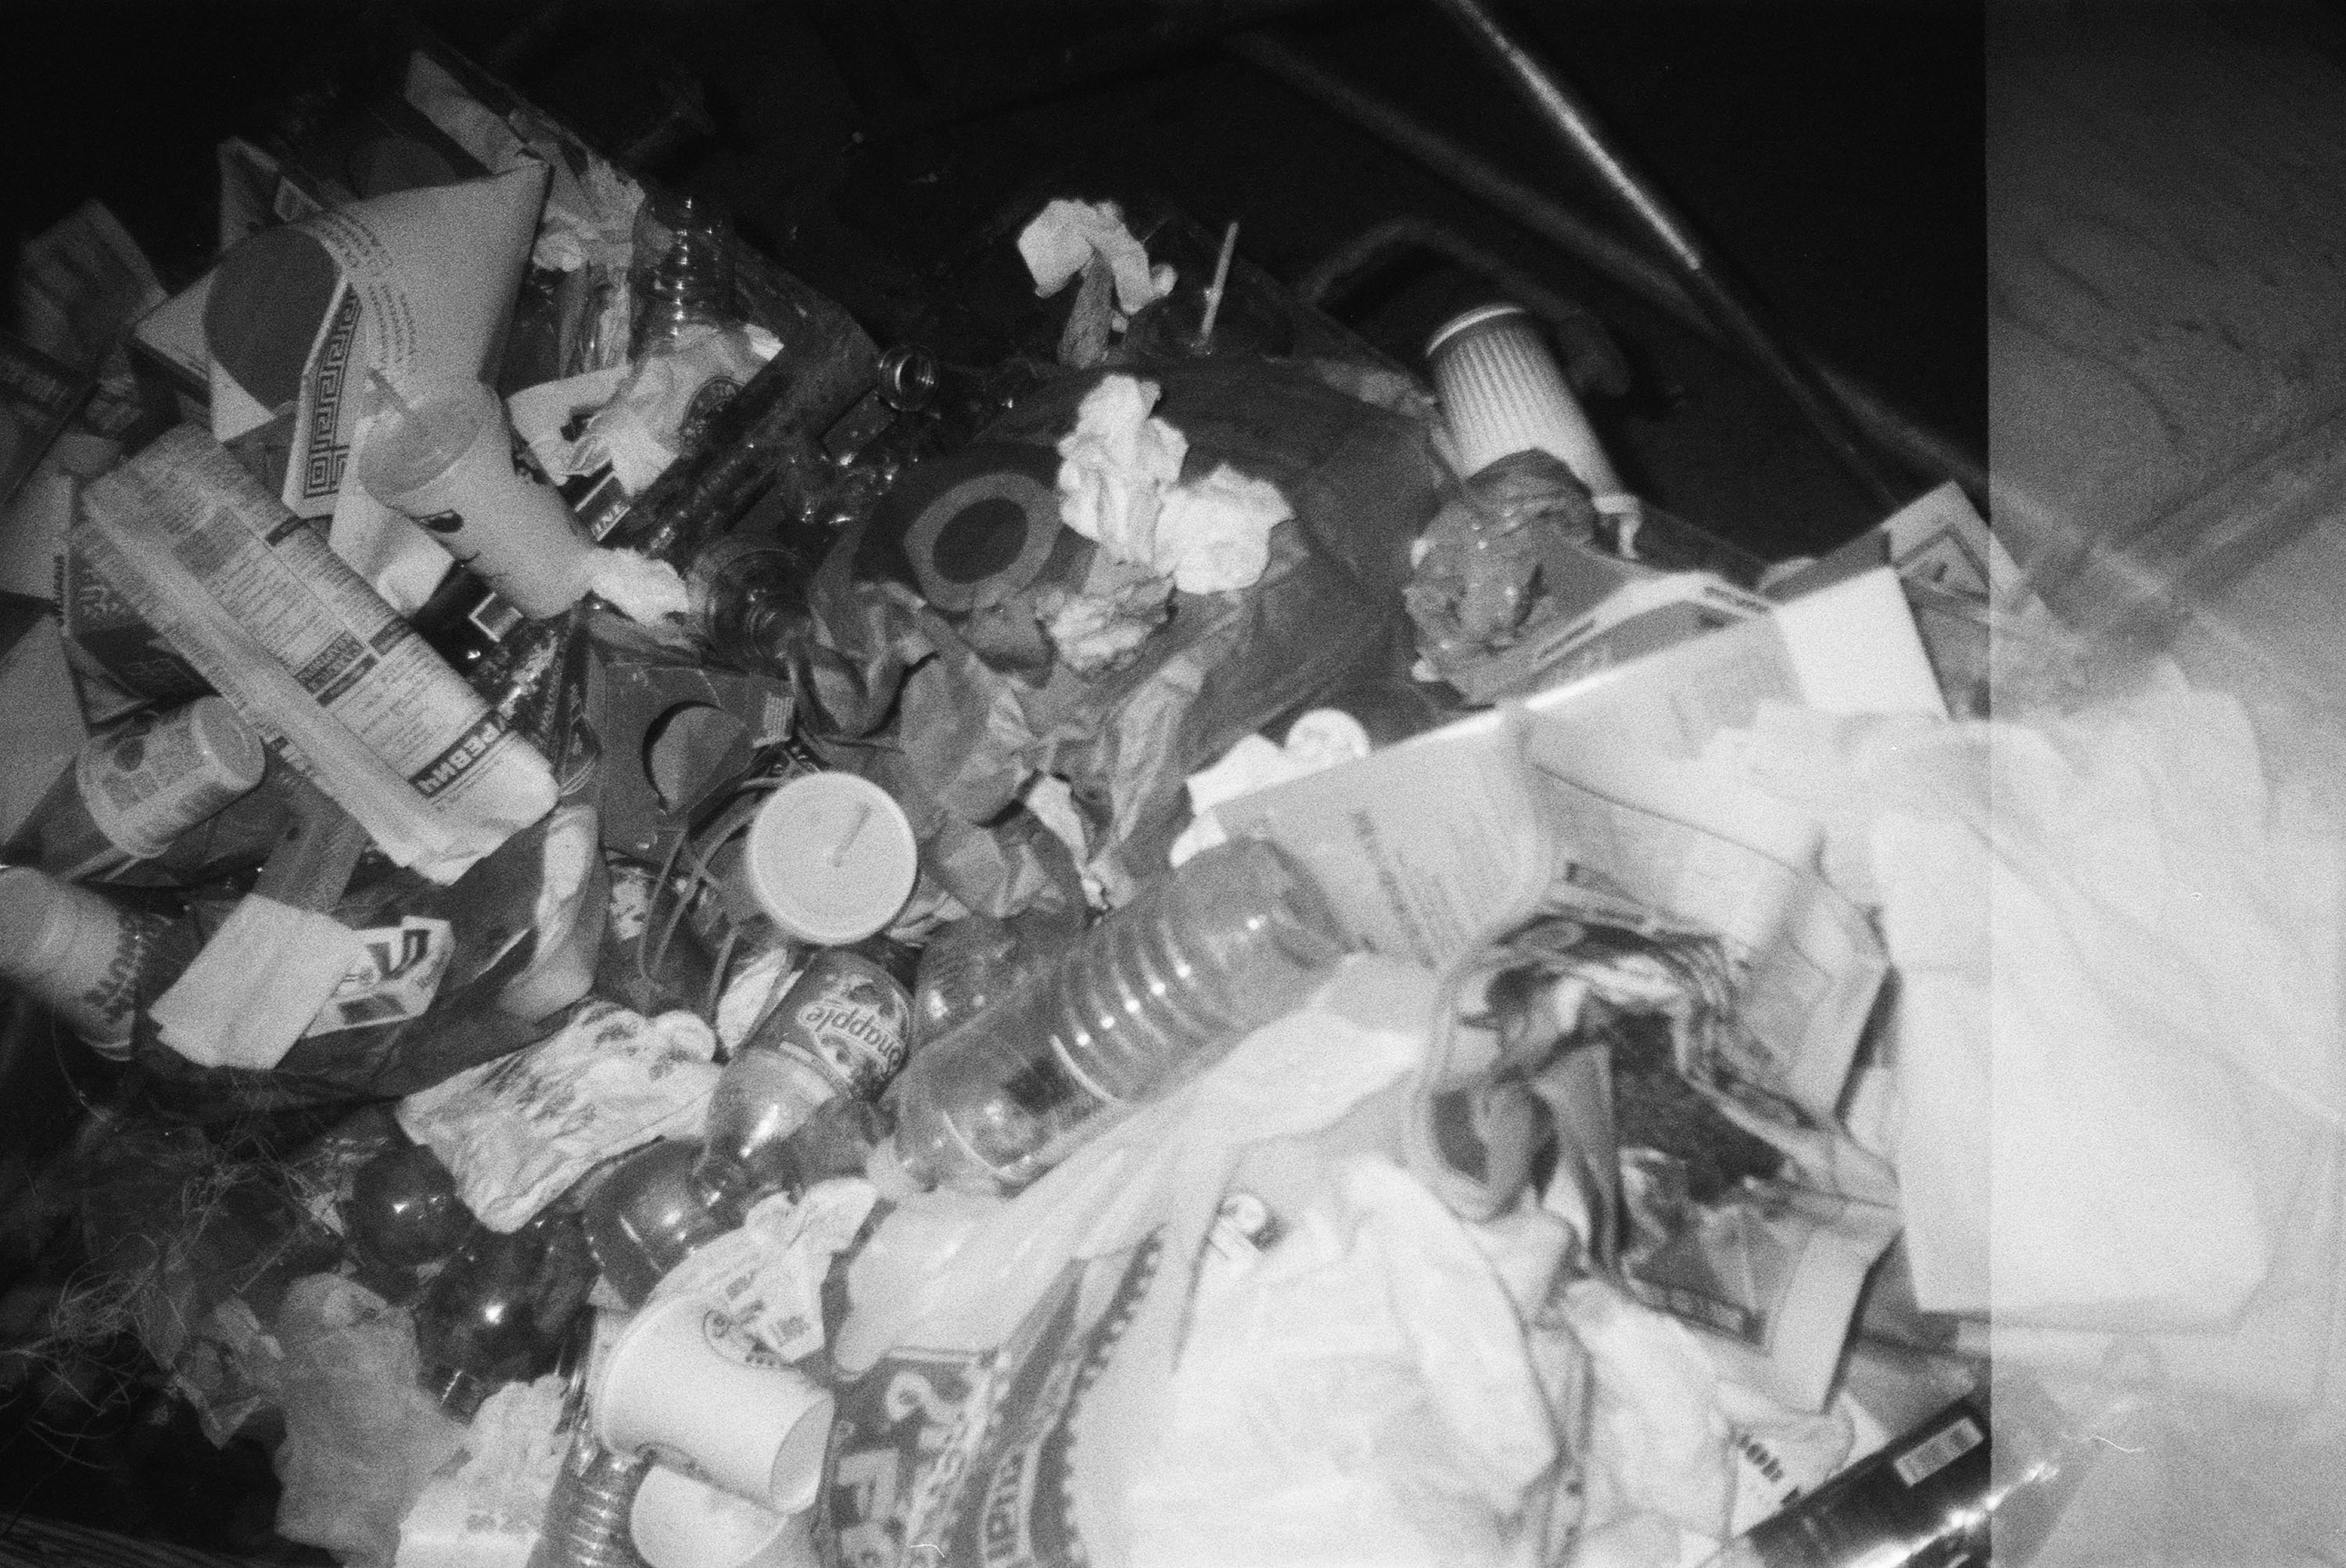 Garbage in New York City. Photo: Curtis Cuffie, ca. 1990-99